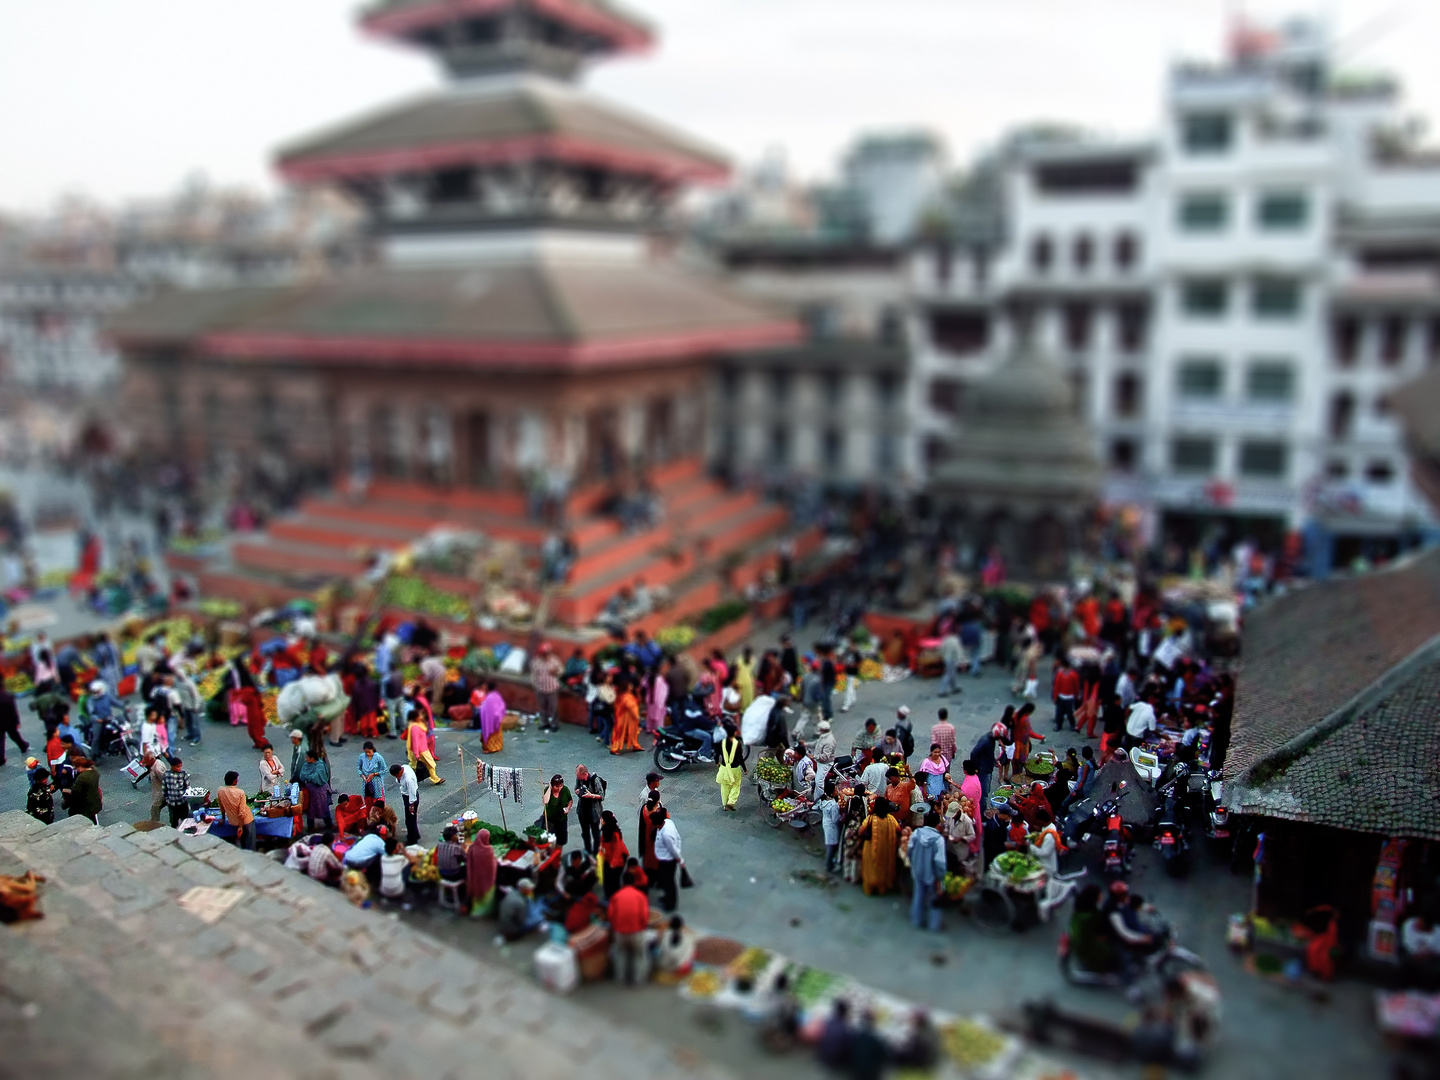 The small world of Kathmandu Durbar Market